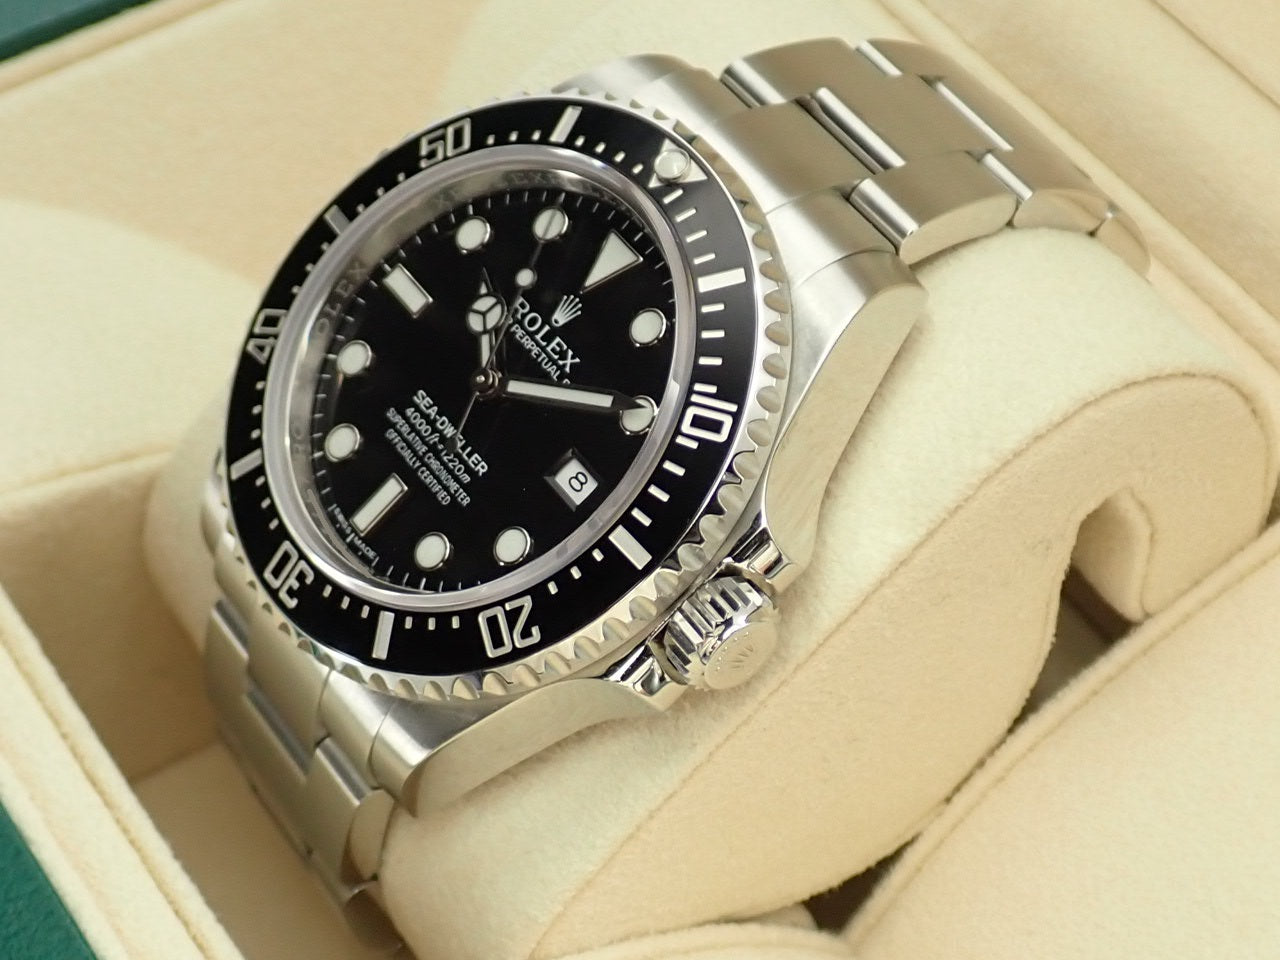 Rolex Sea-Dweller 4000 [Unused] &lt;Warranty, Box, etc.&gt;